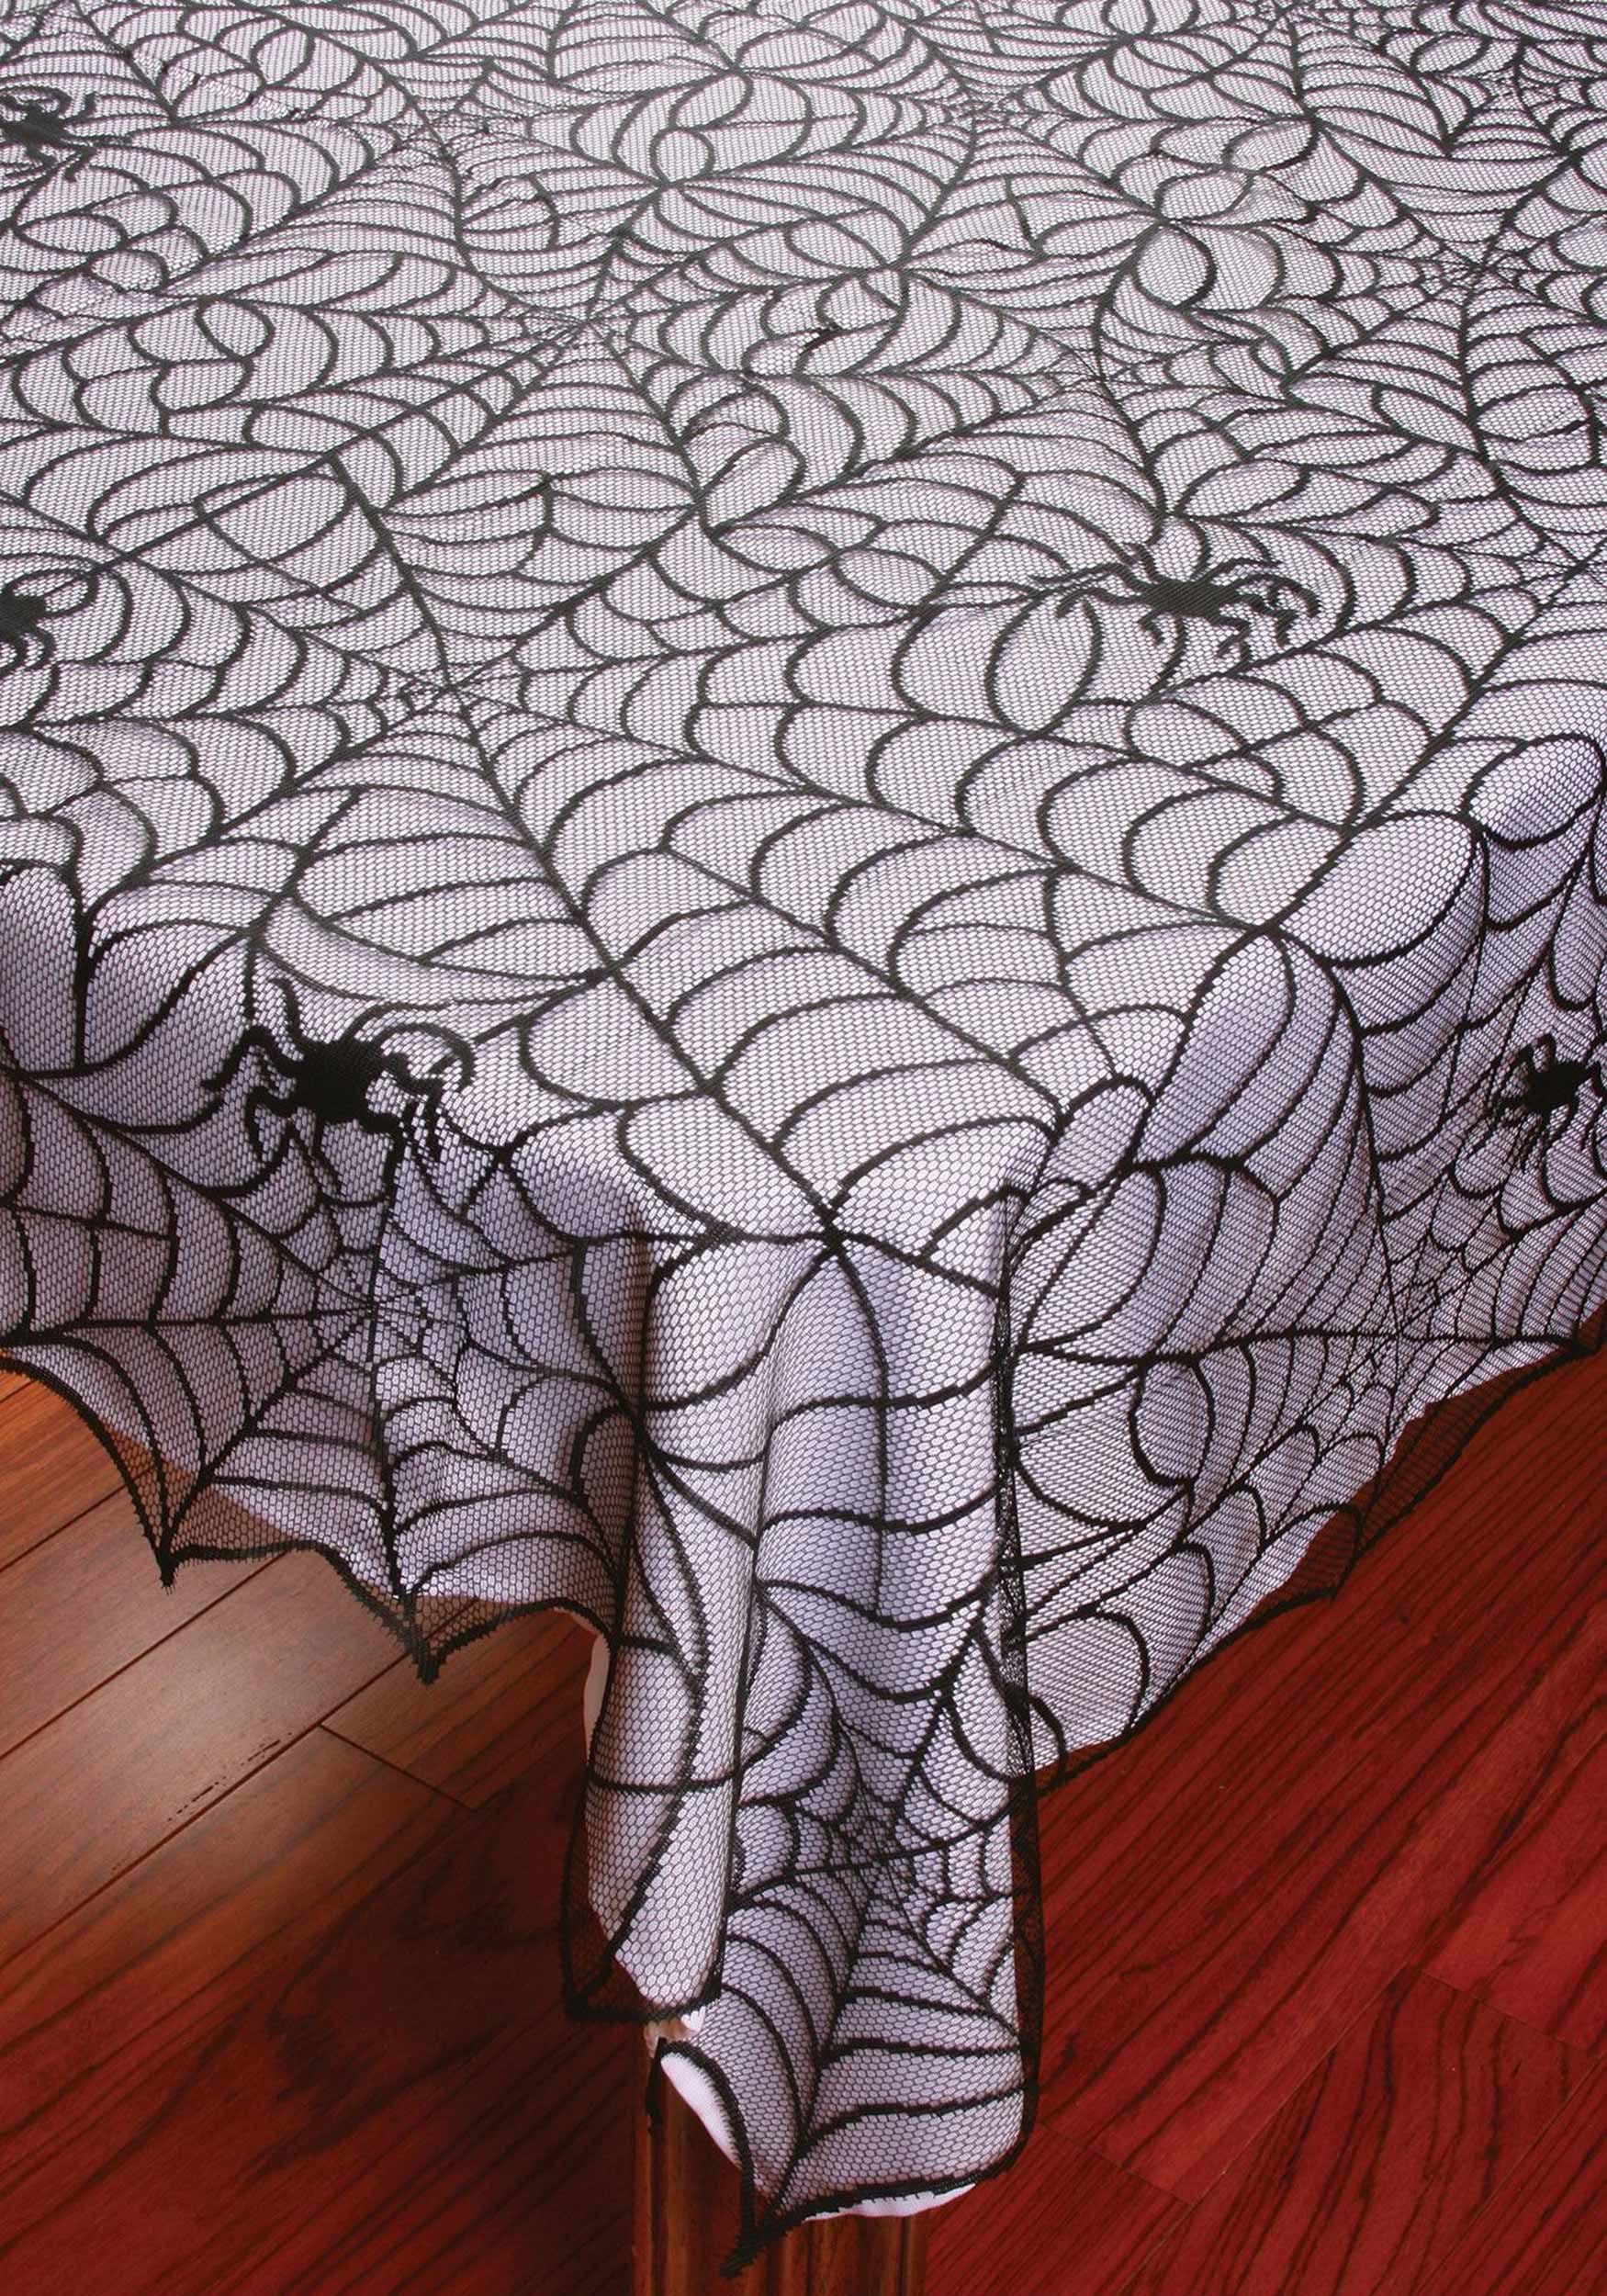 Photos - Other interior and decor Fun World Lacy Spiderweb Decorative Tablecloth Black